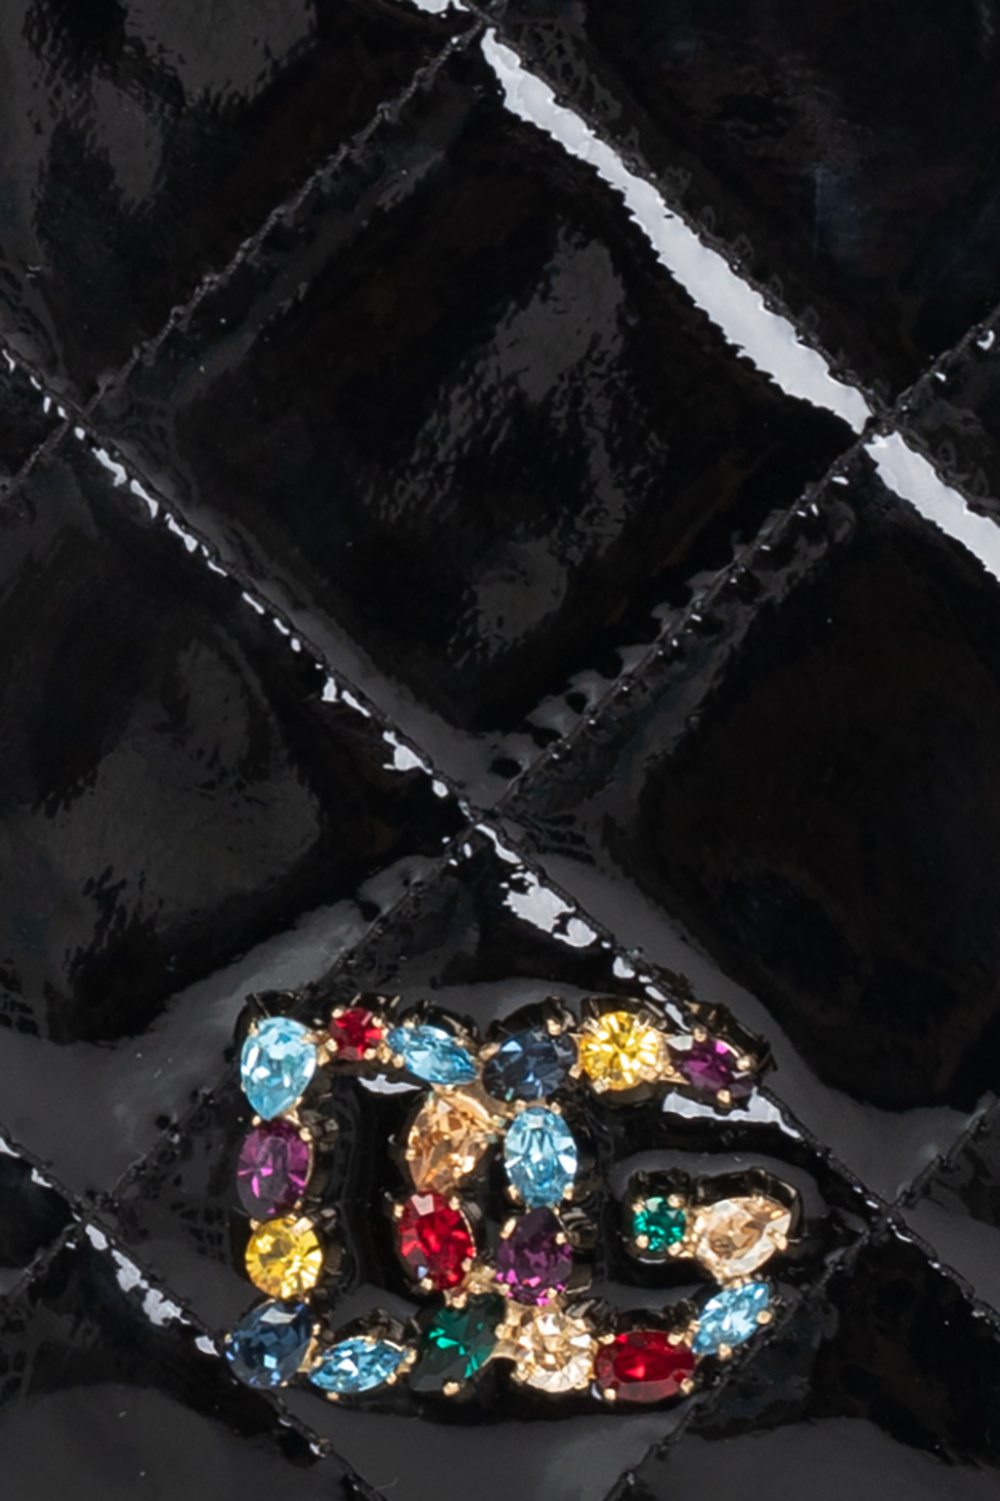 Dolce & Gabbana logo-embossed iPhone 14 Pro Max Case - Black